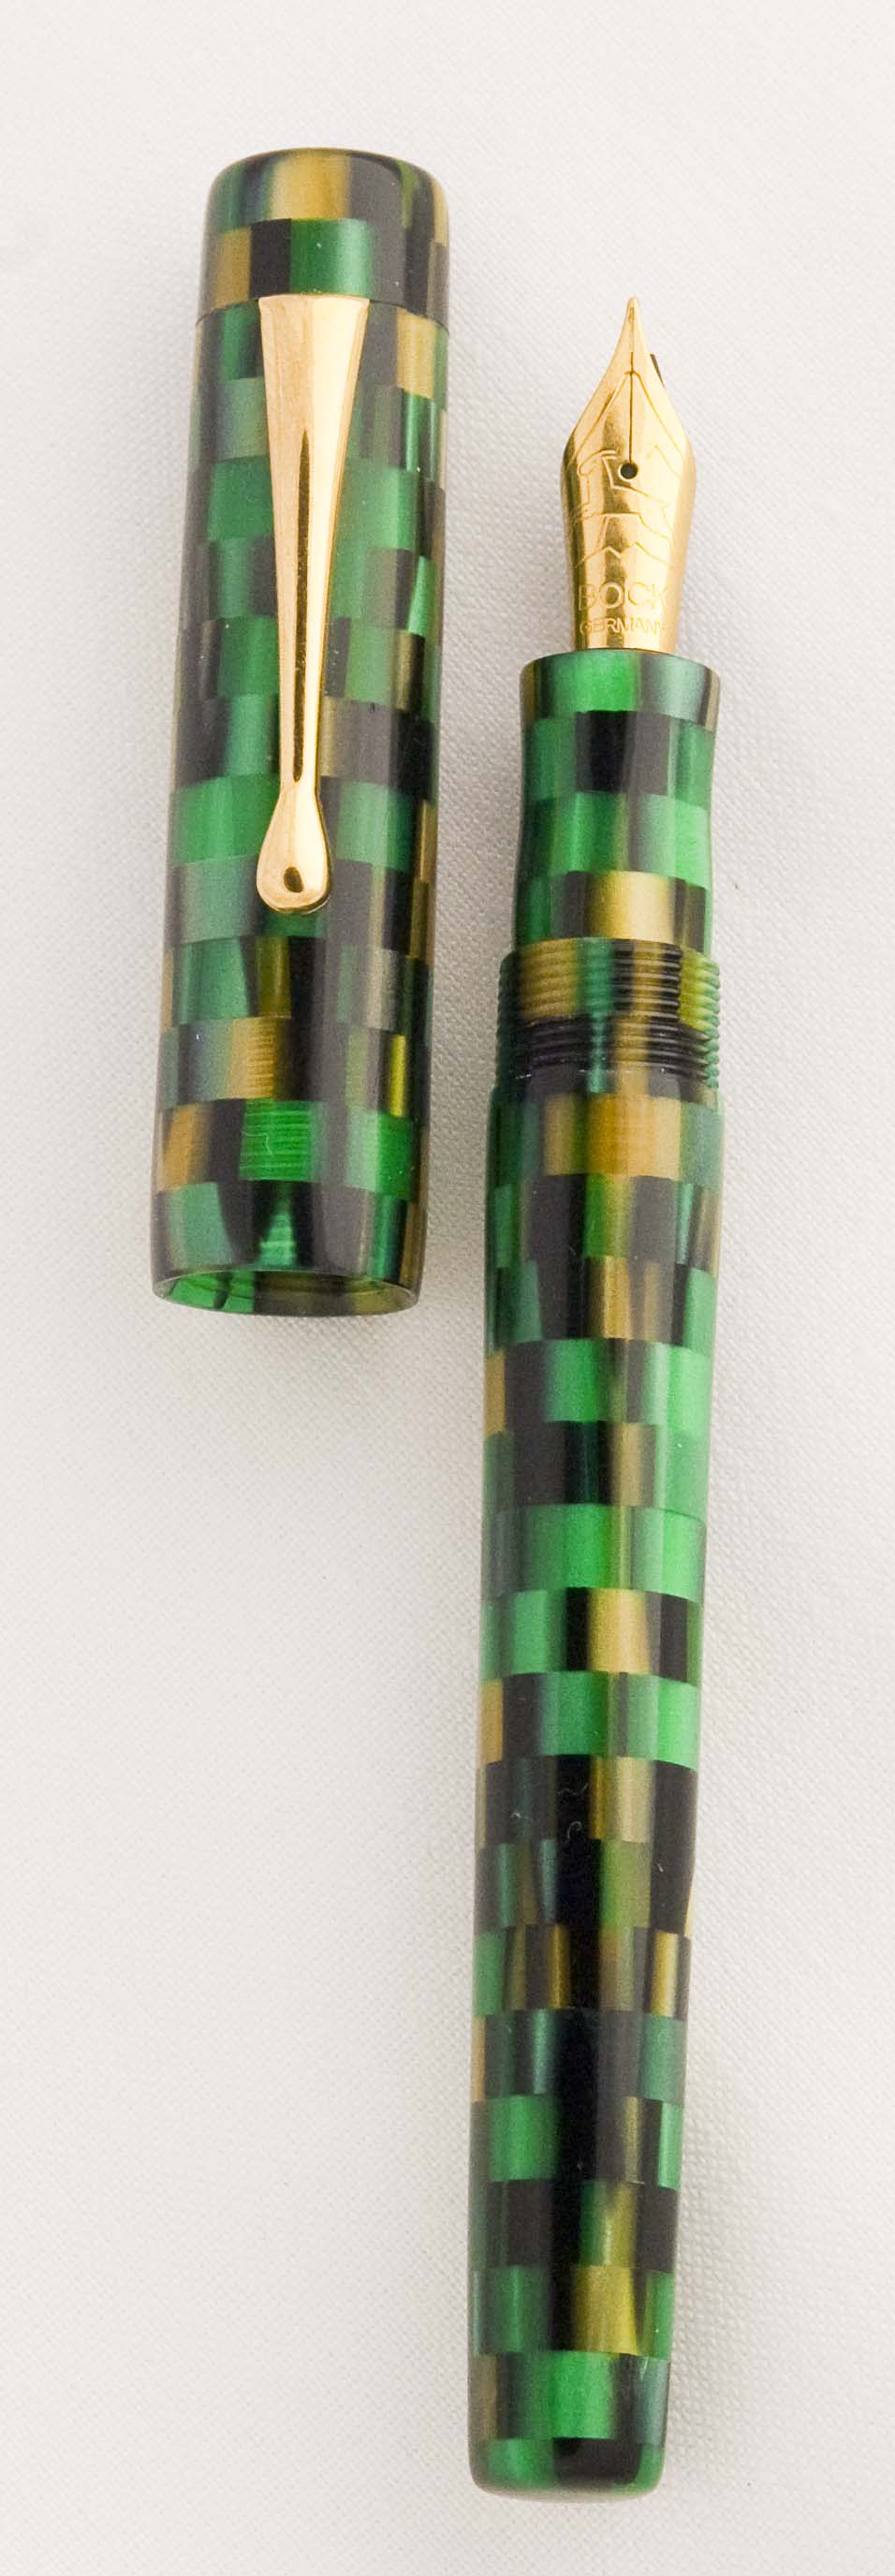 Custom Green and Gold Mosaic